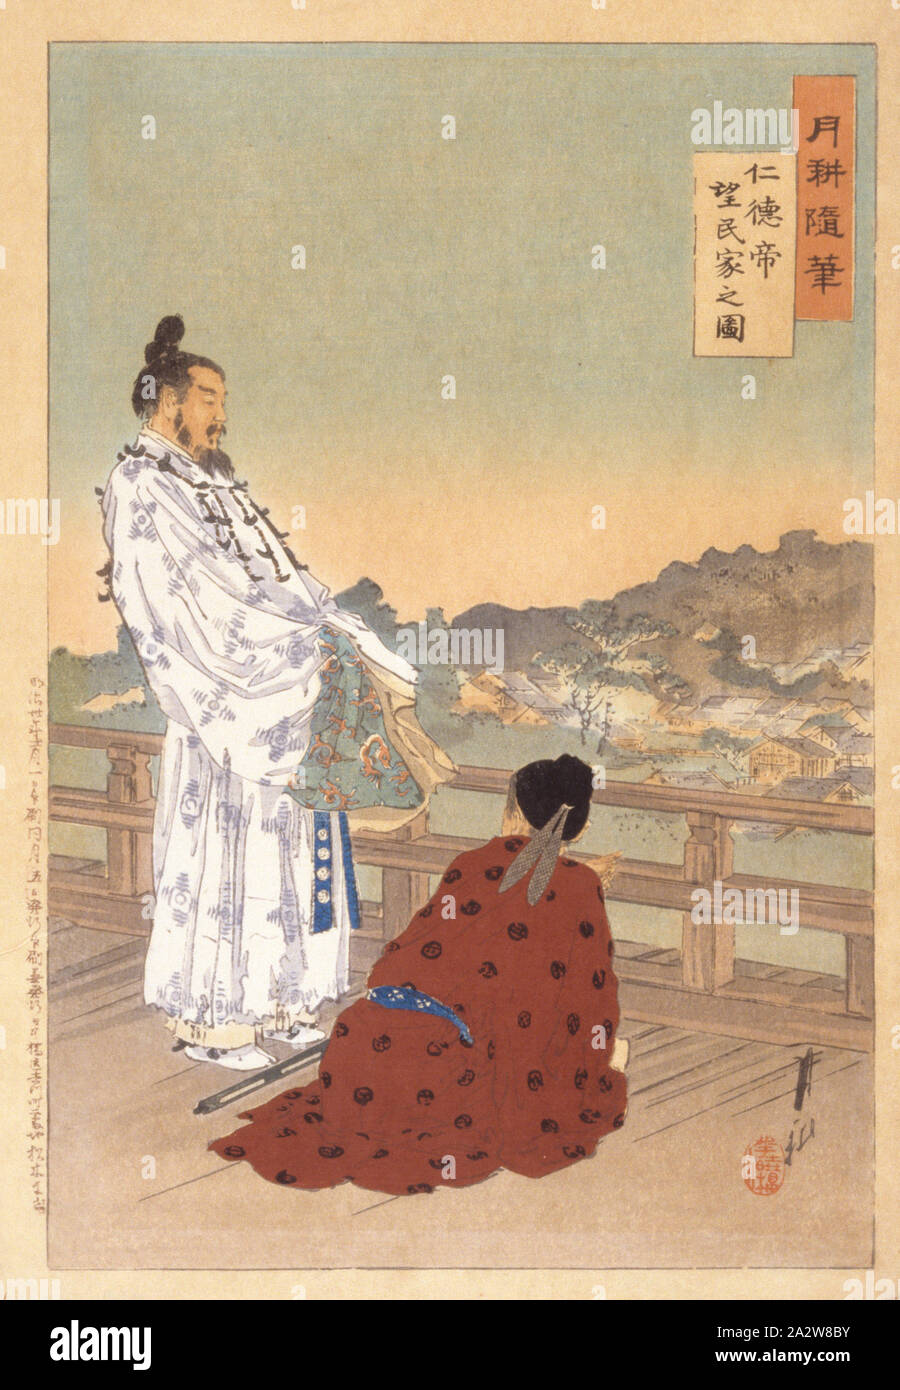 Taigong Wang, Ogata Gekkō (japonais, 1859-1920), fin du xixe siècle - début  du xxe siècle, encre